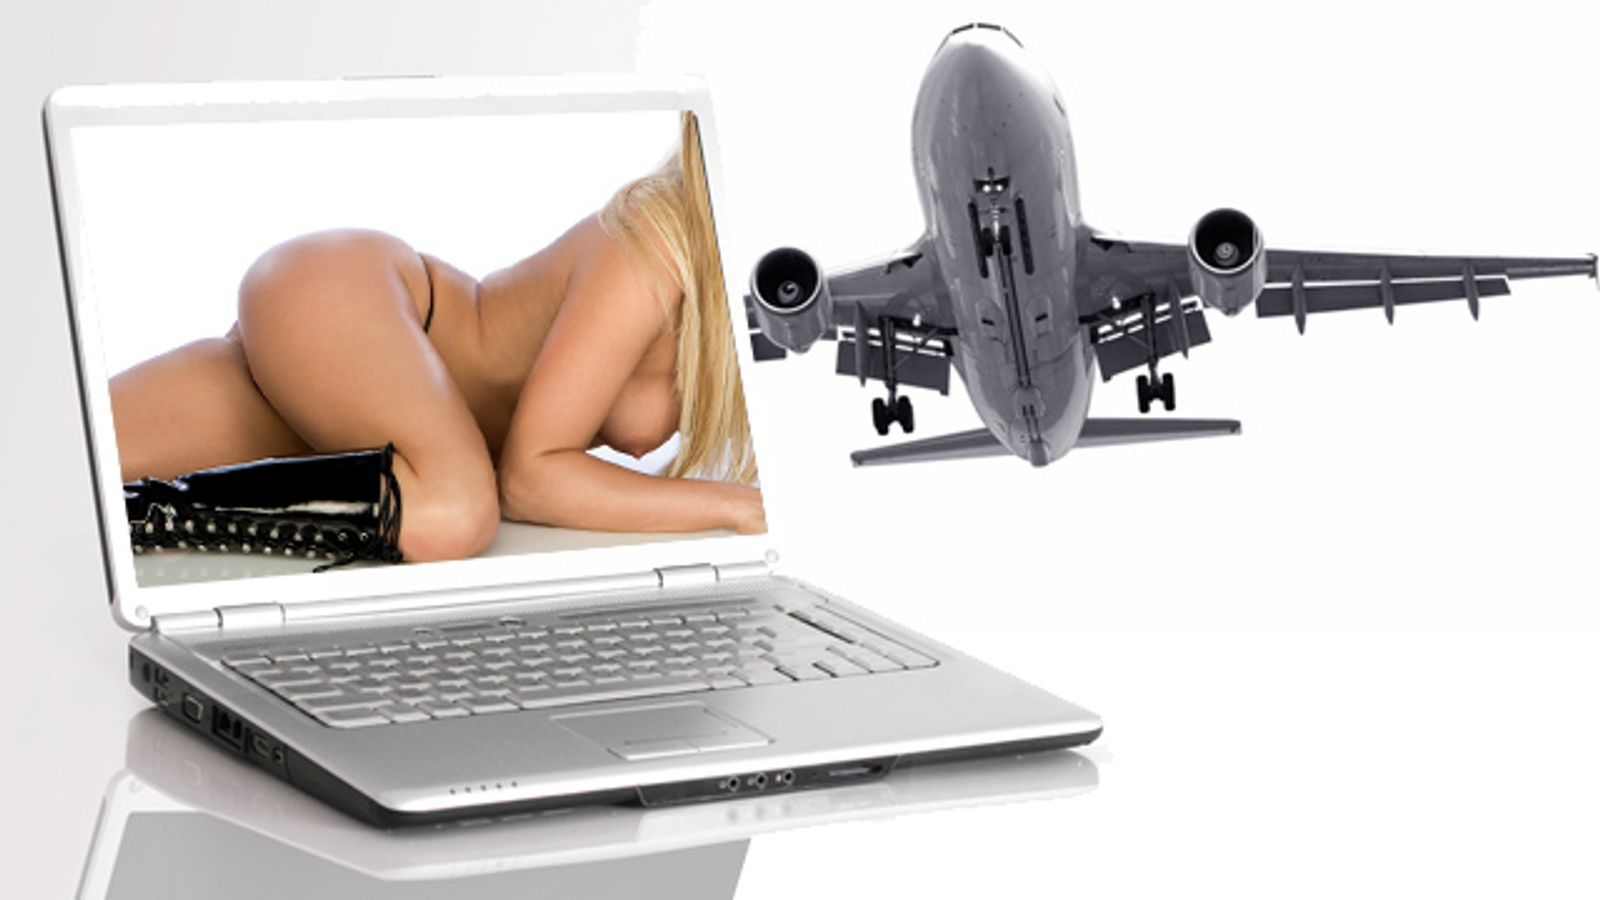 Virgin Air Allows In-Flight Porn